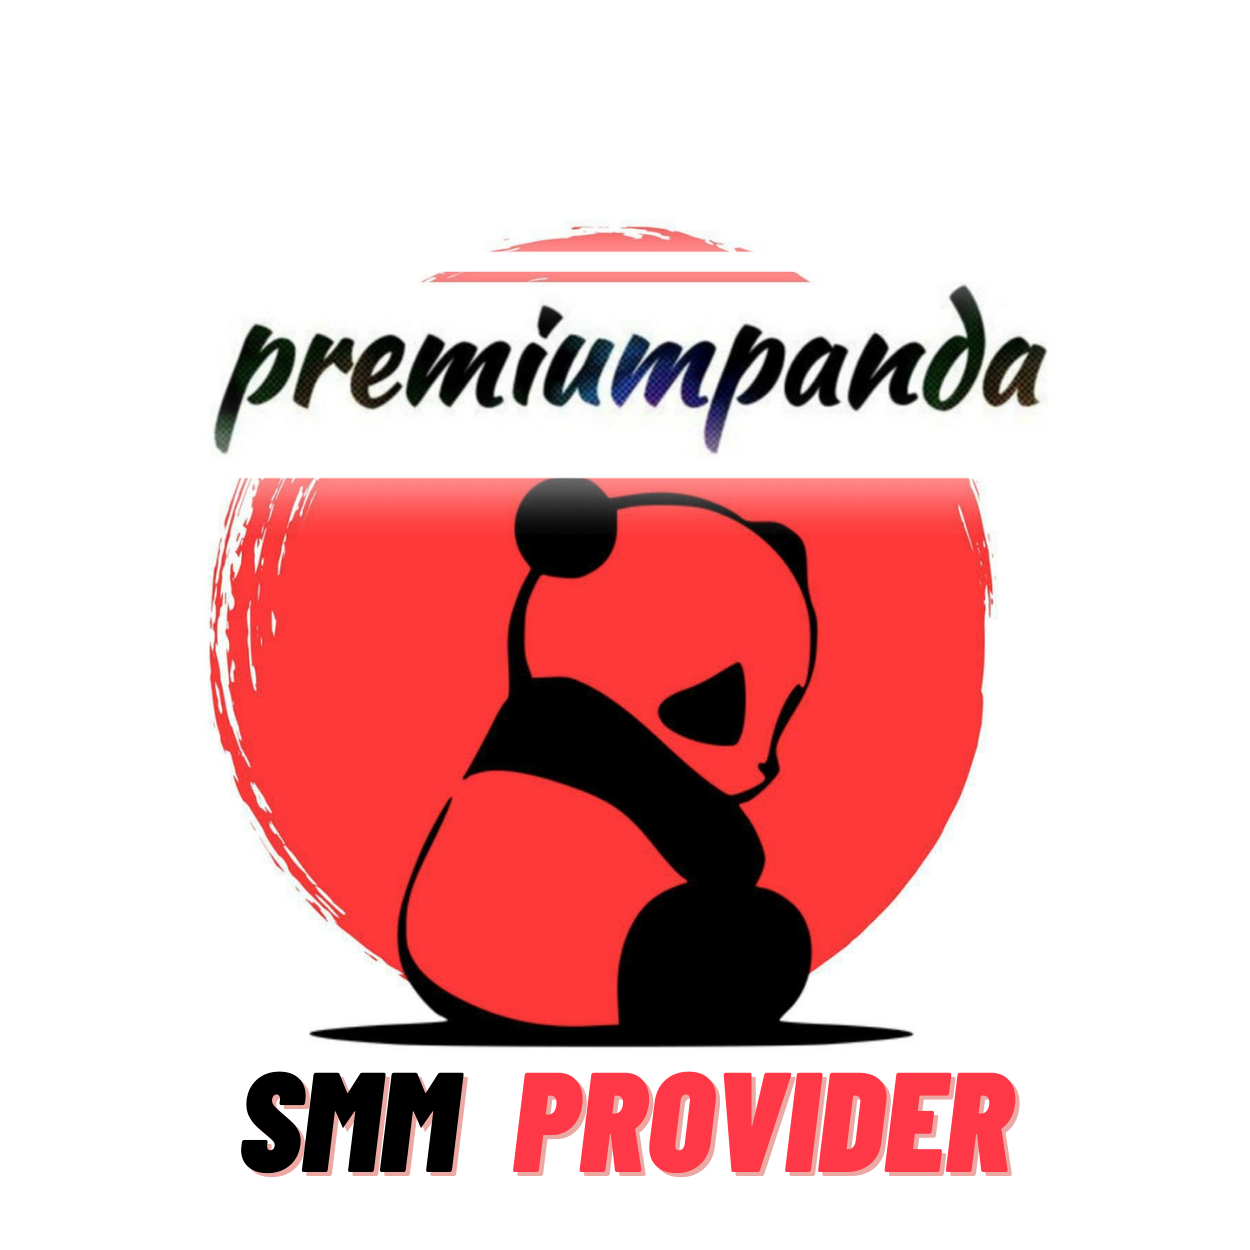 Premium Panda